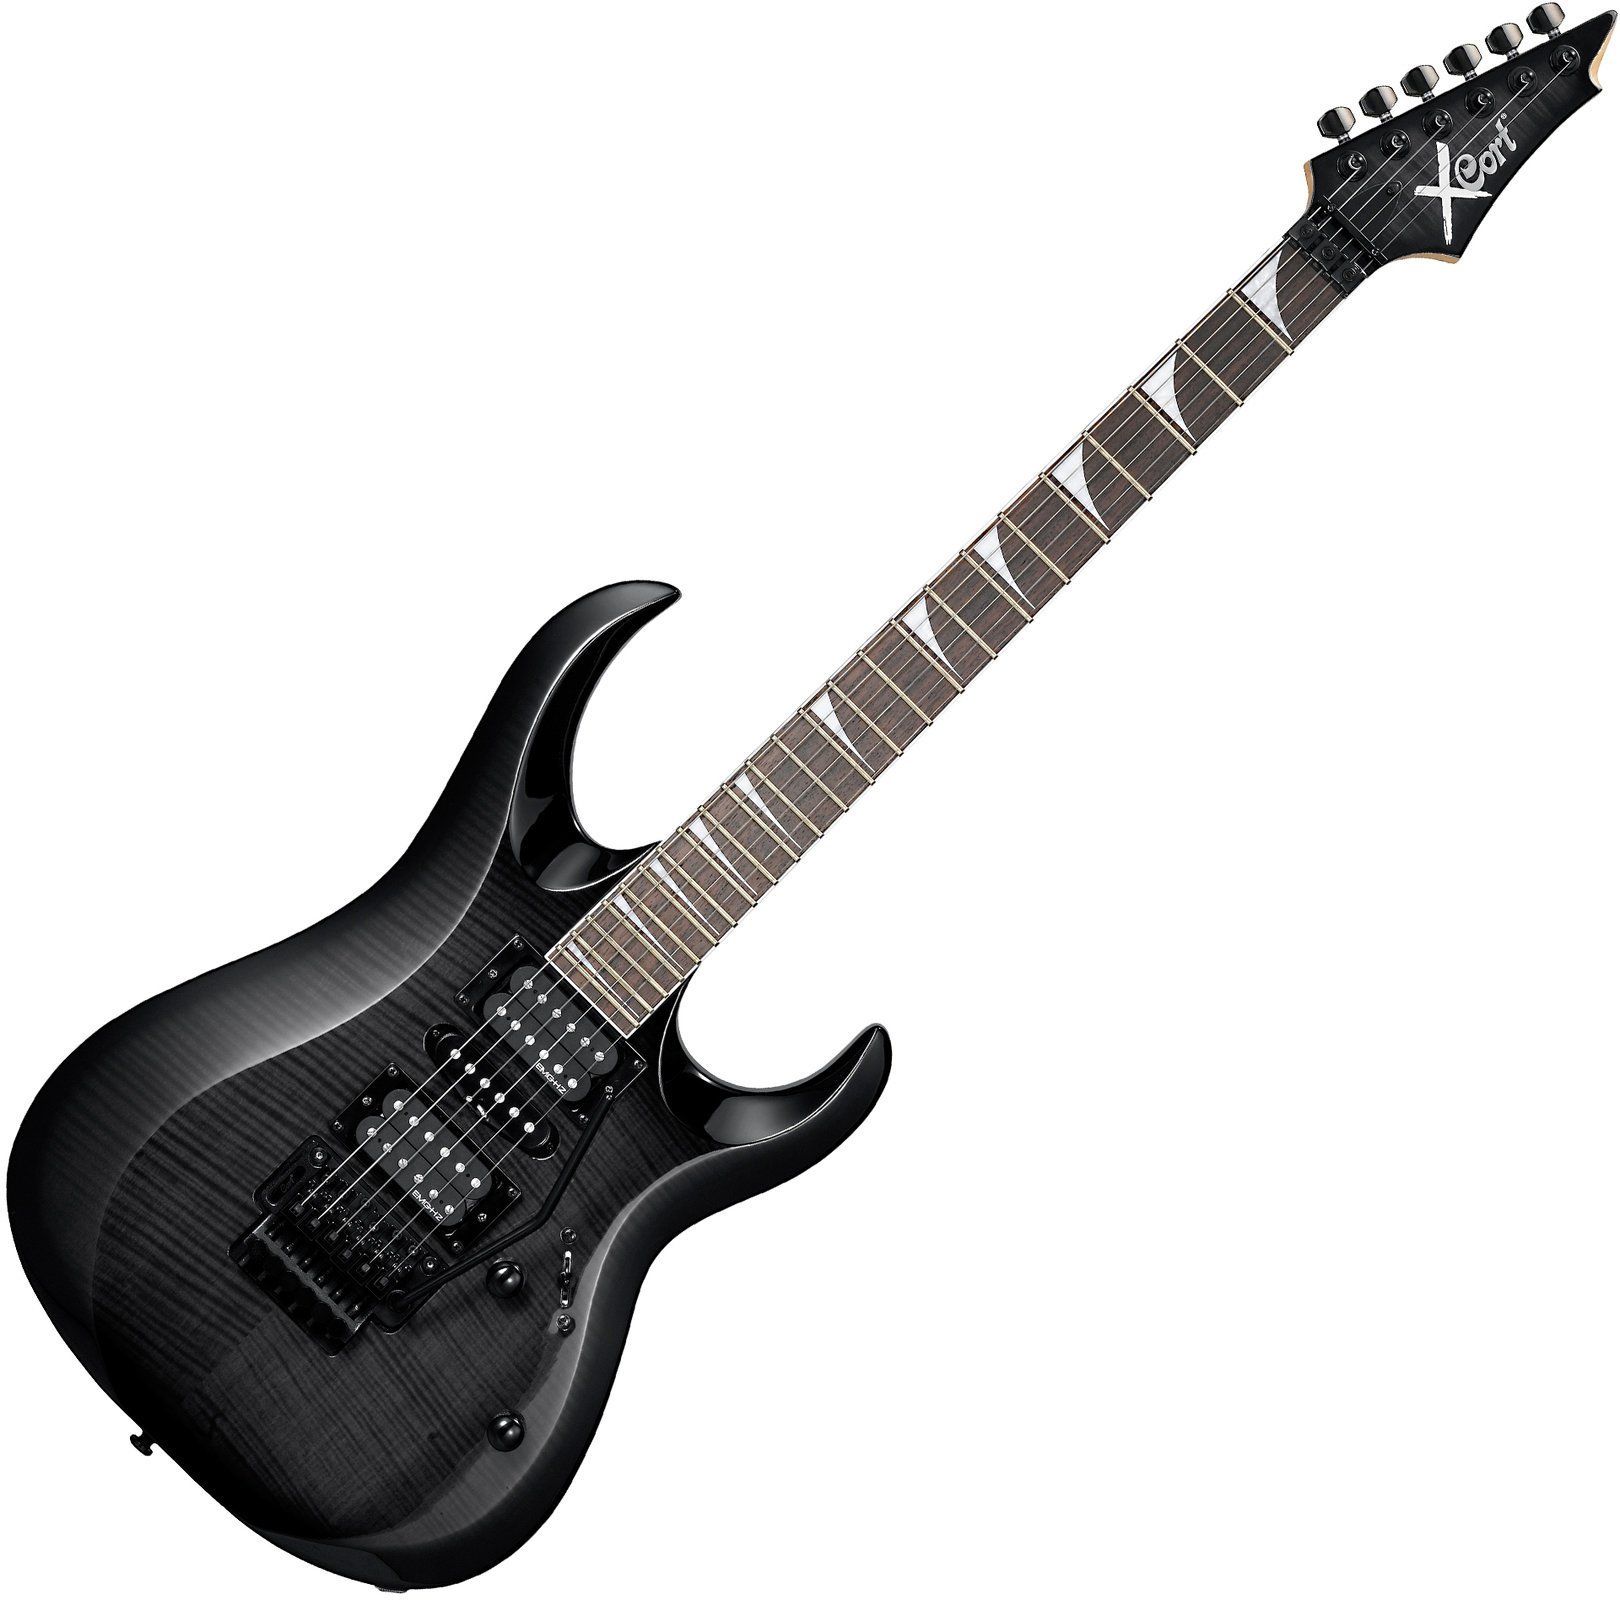 Elektrisk guitar Cort X-11 Sort